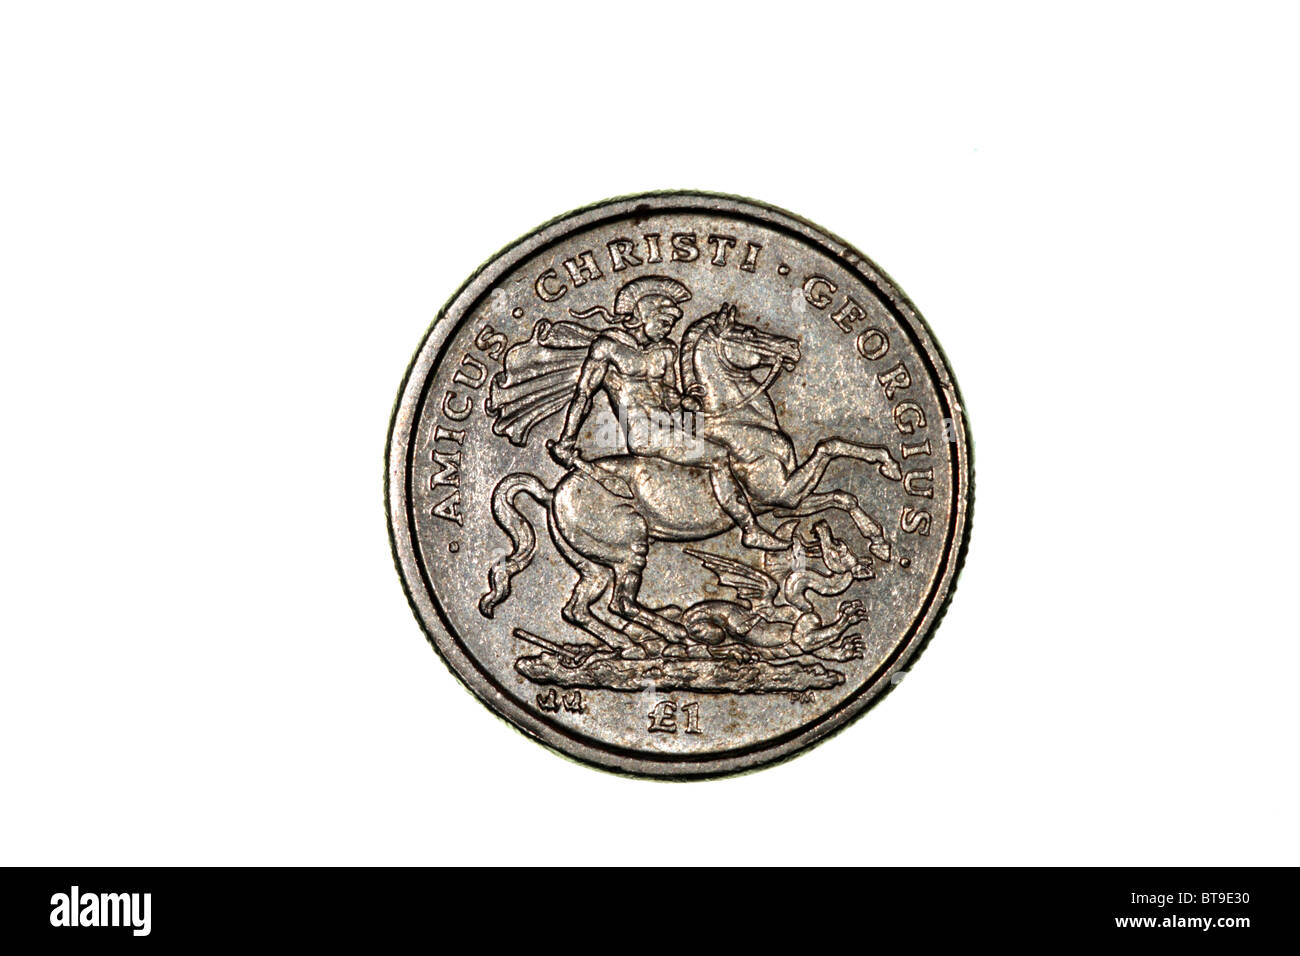 Pound coin design Stock Photo